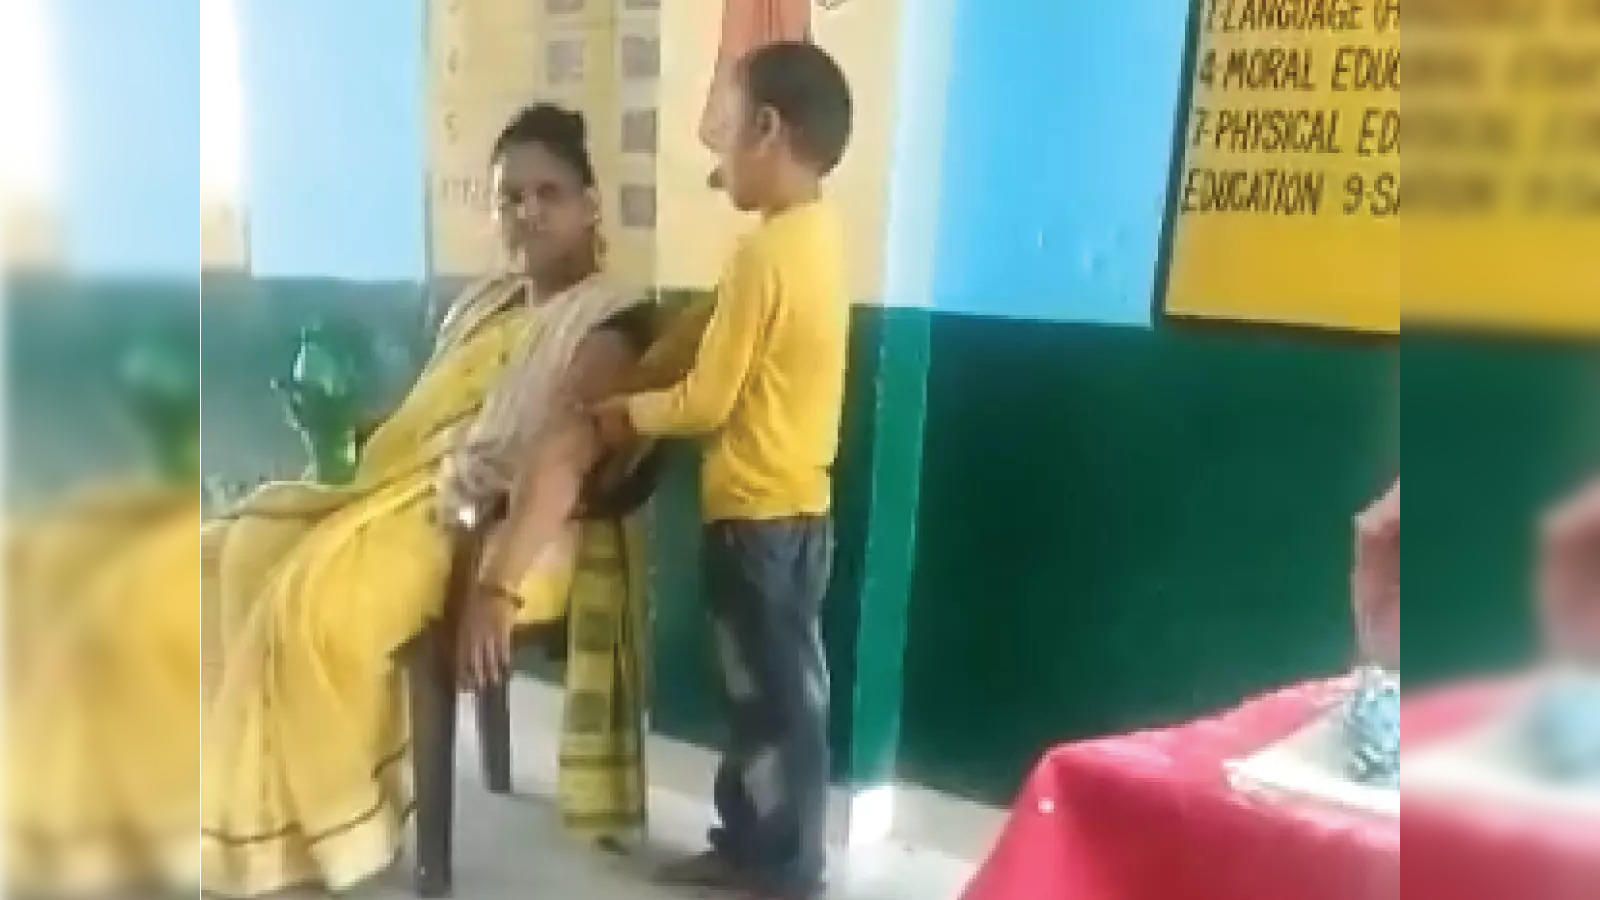 School Girls Boys Student Xxx - Teacher Massage: Teacher gets student to massage her arm, is suspended:  Viral video - The Economic Times